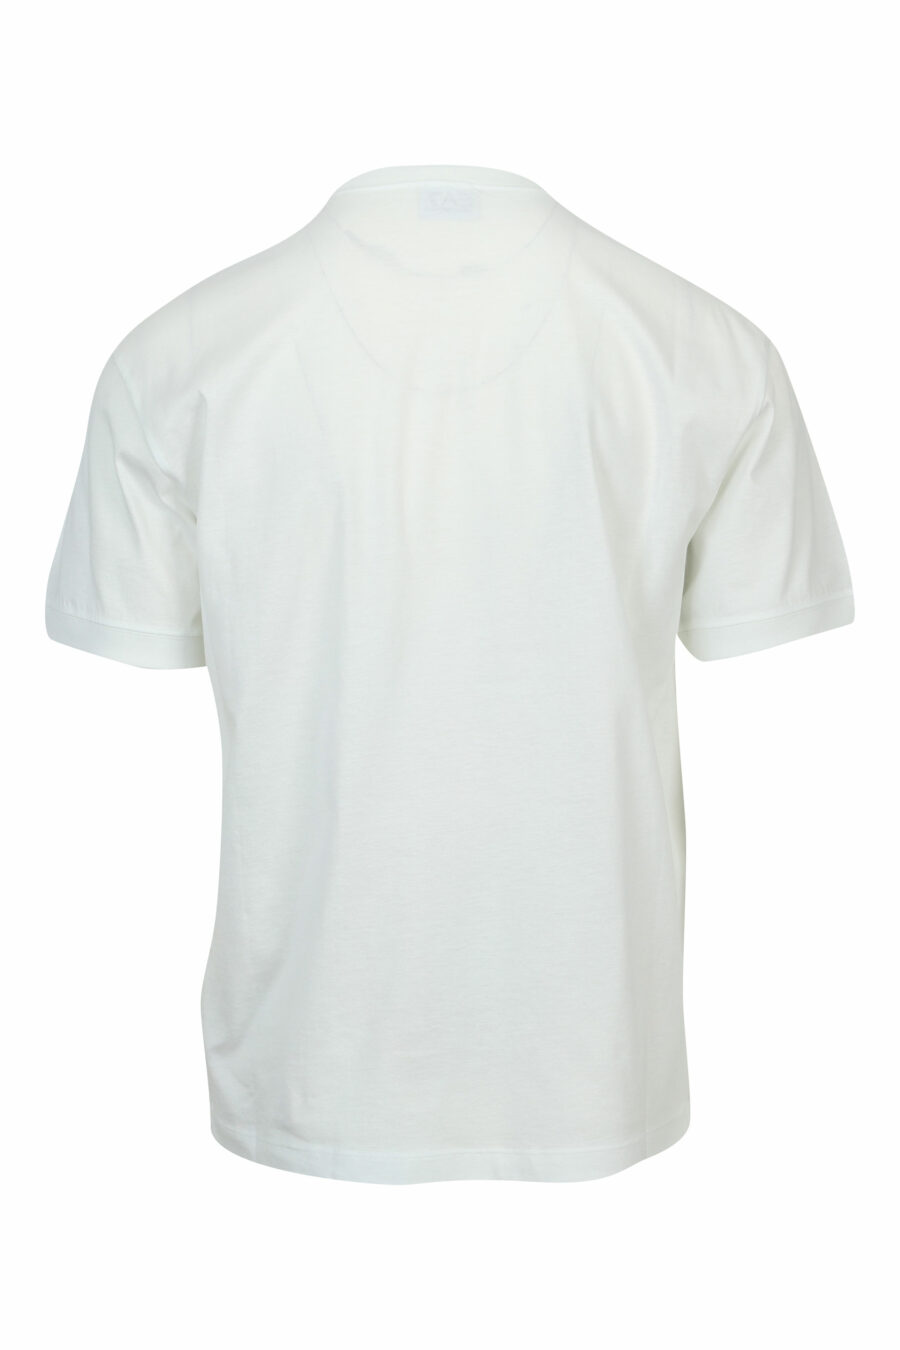 Camiseta blanca con maxilogo "lux identity" en recuadro verde - 8057970672555 1